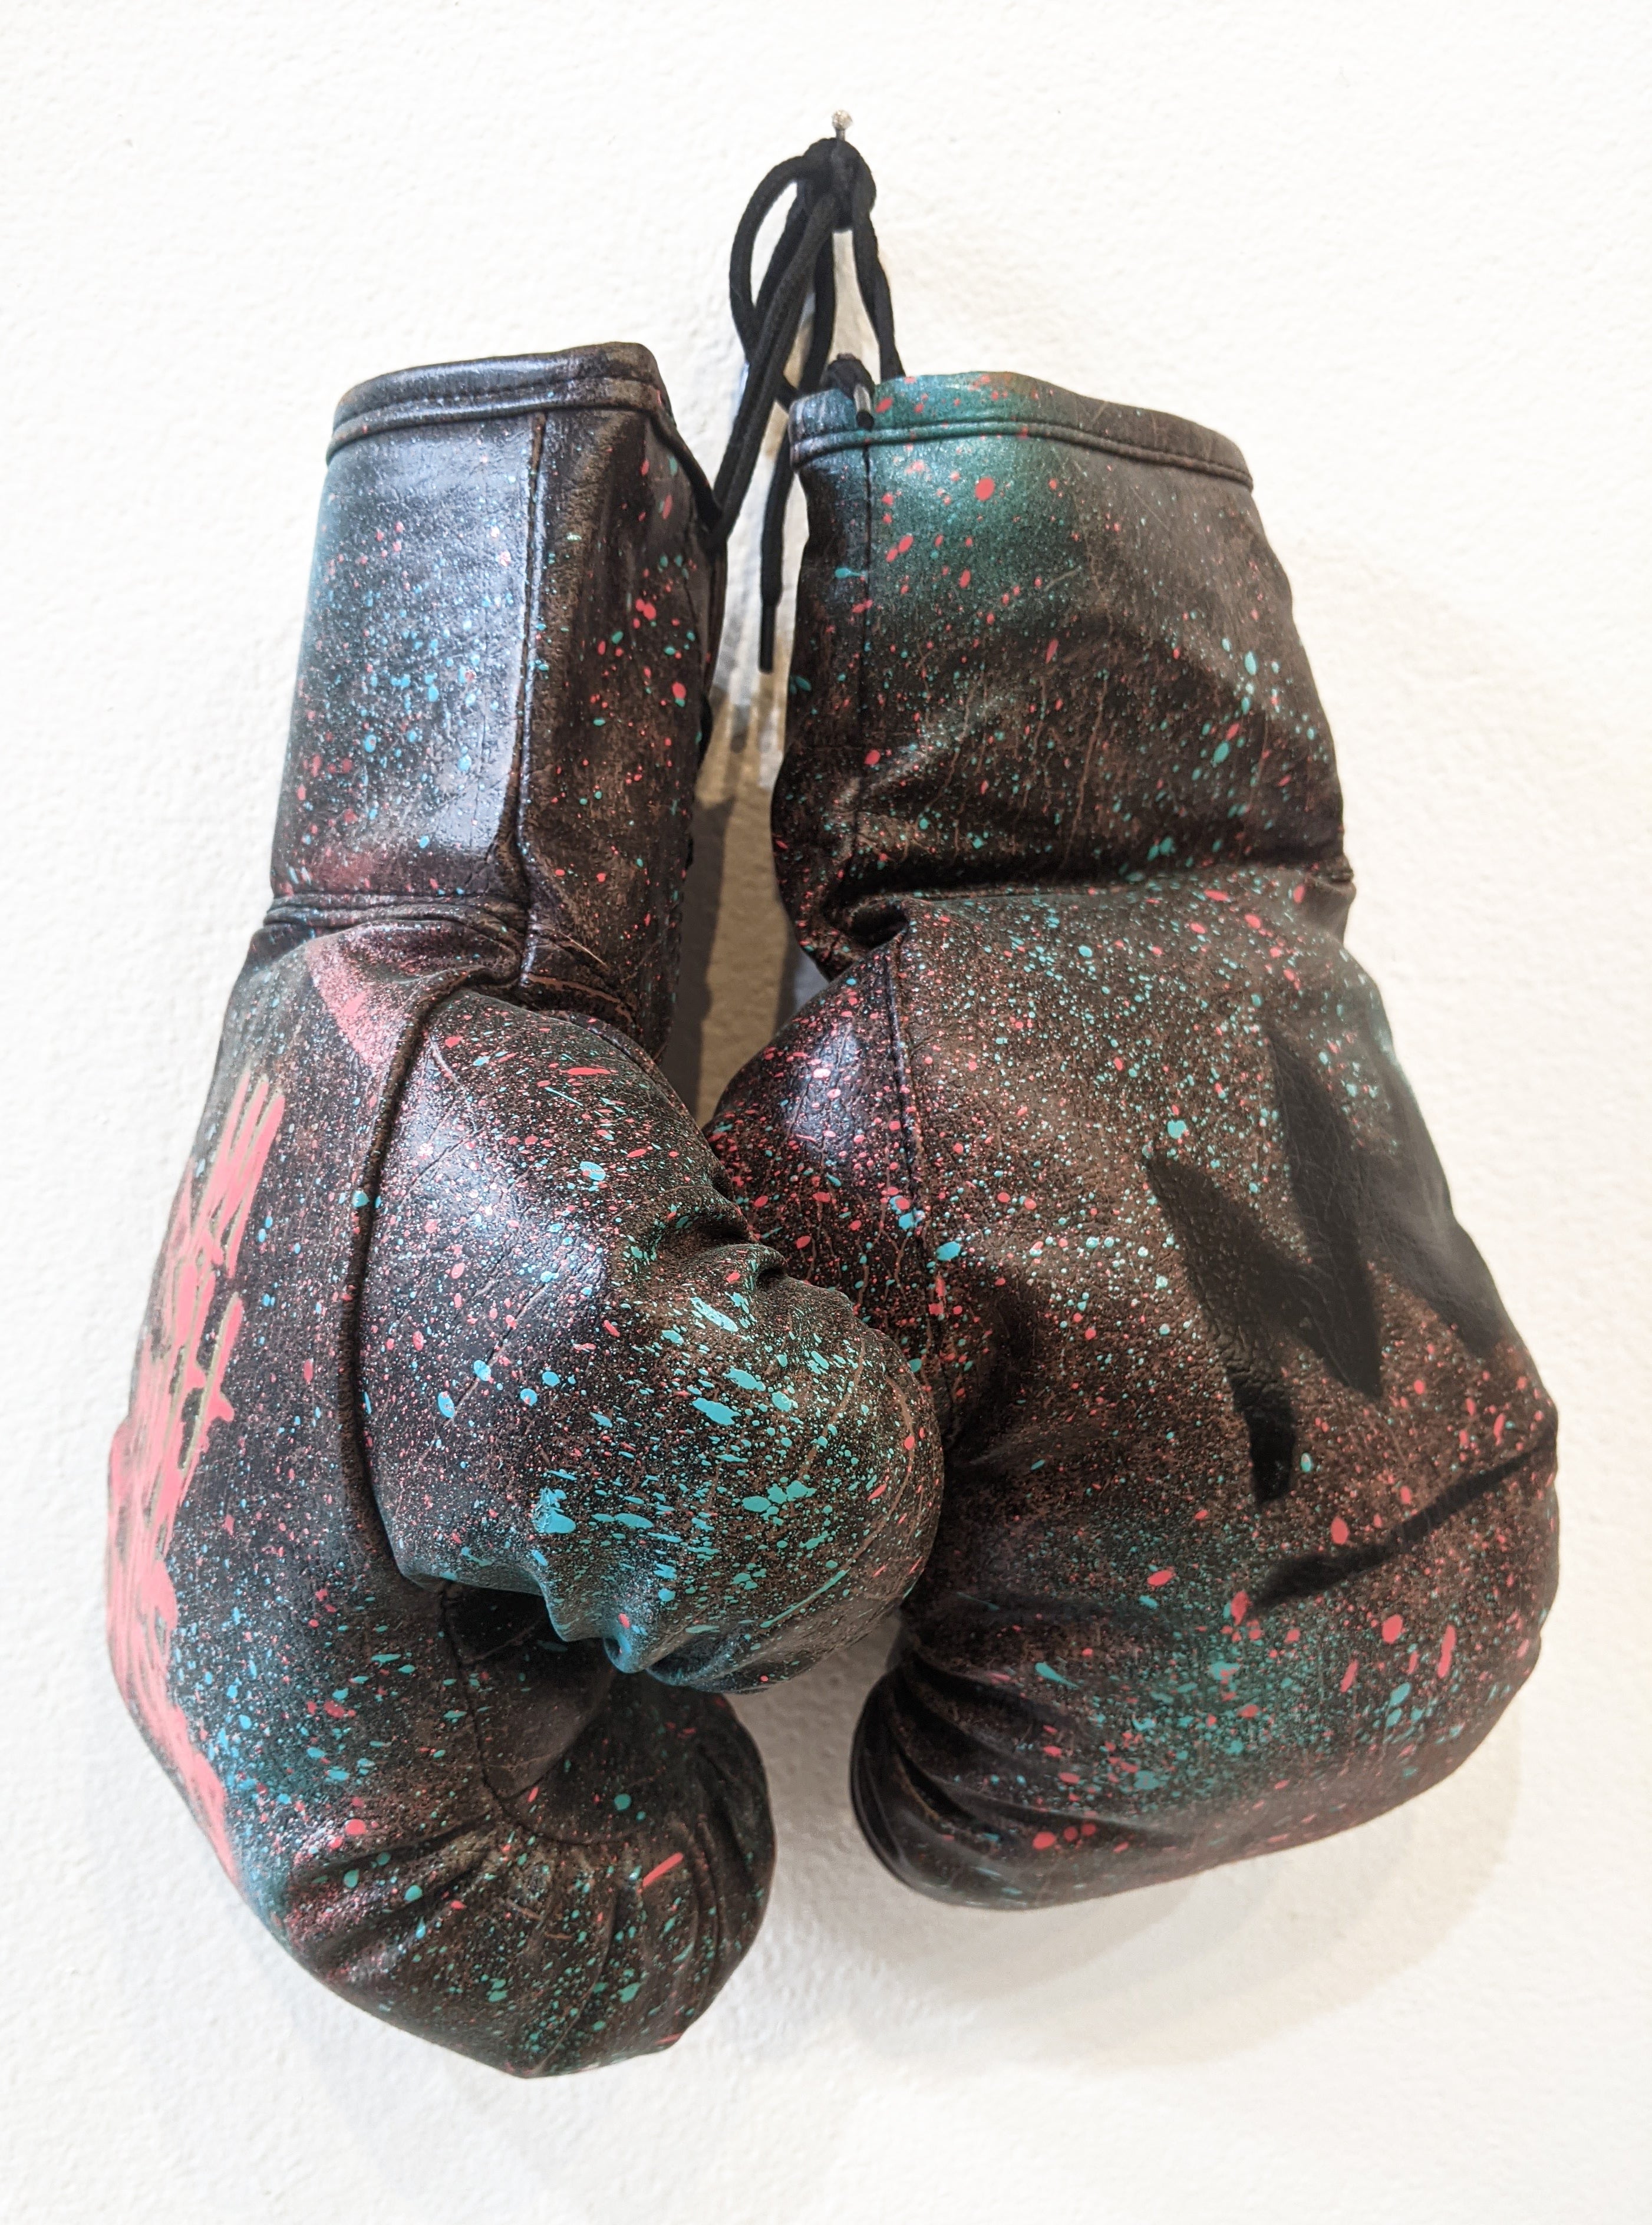 "Vintage Boxing Gloves 5" by JC Rivera